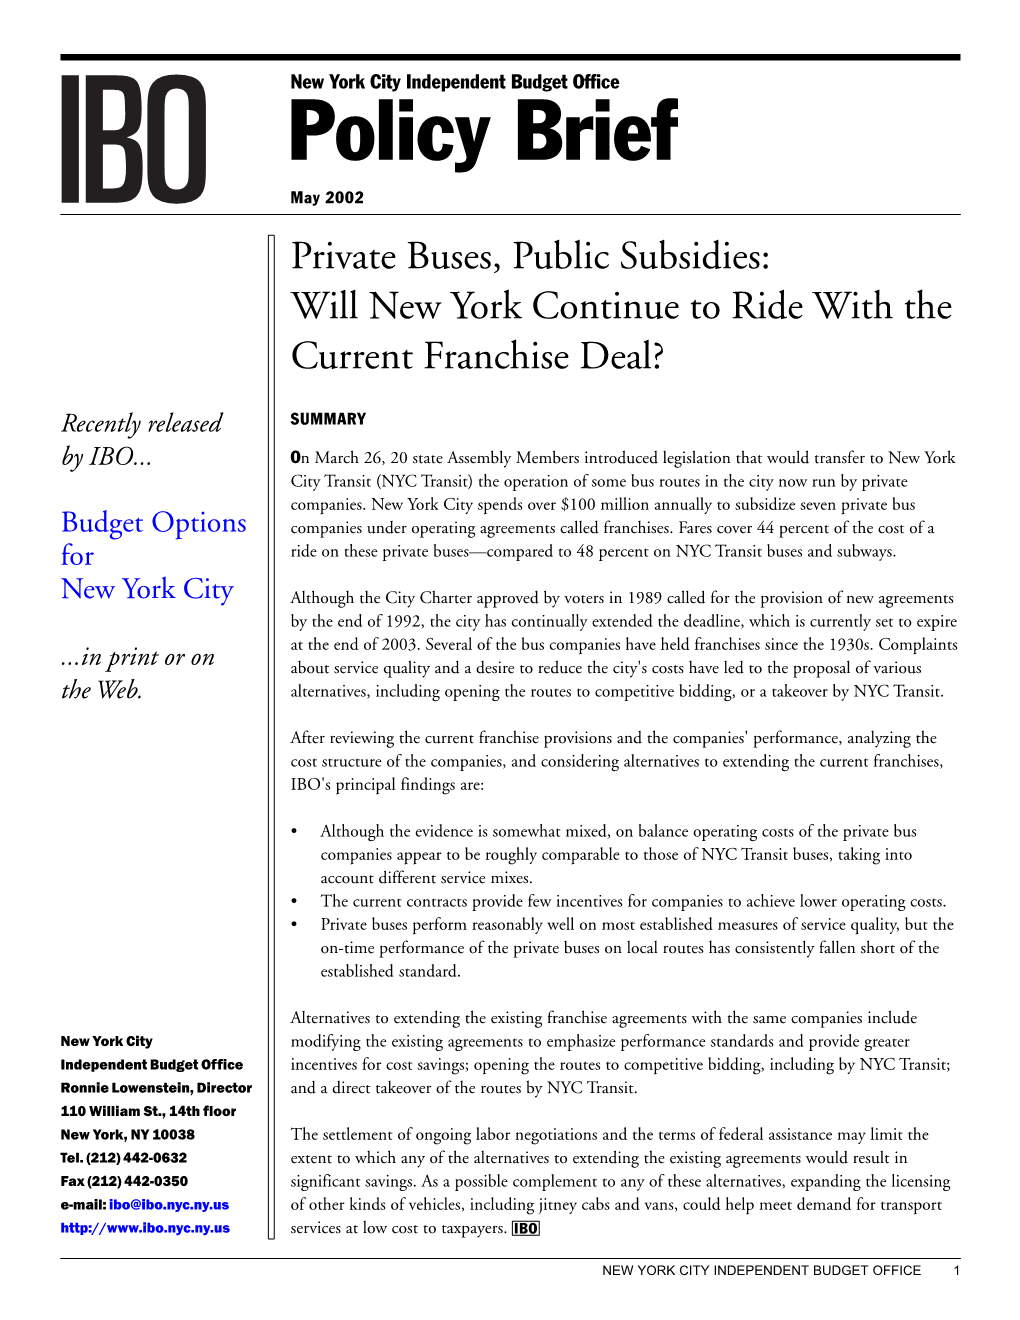 IBO Policy Brief